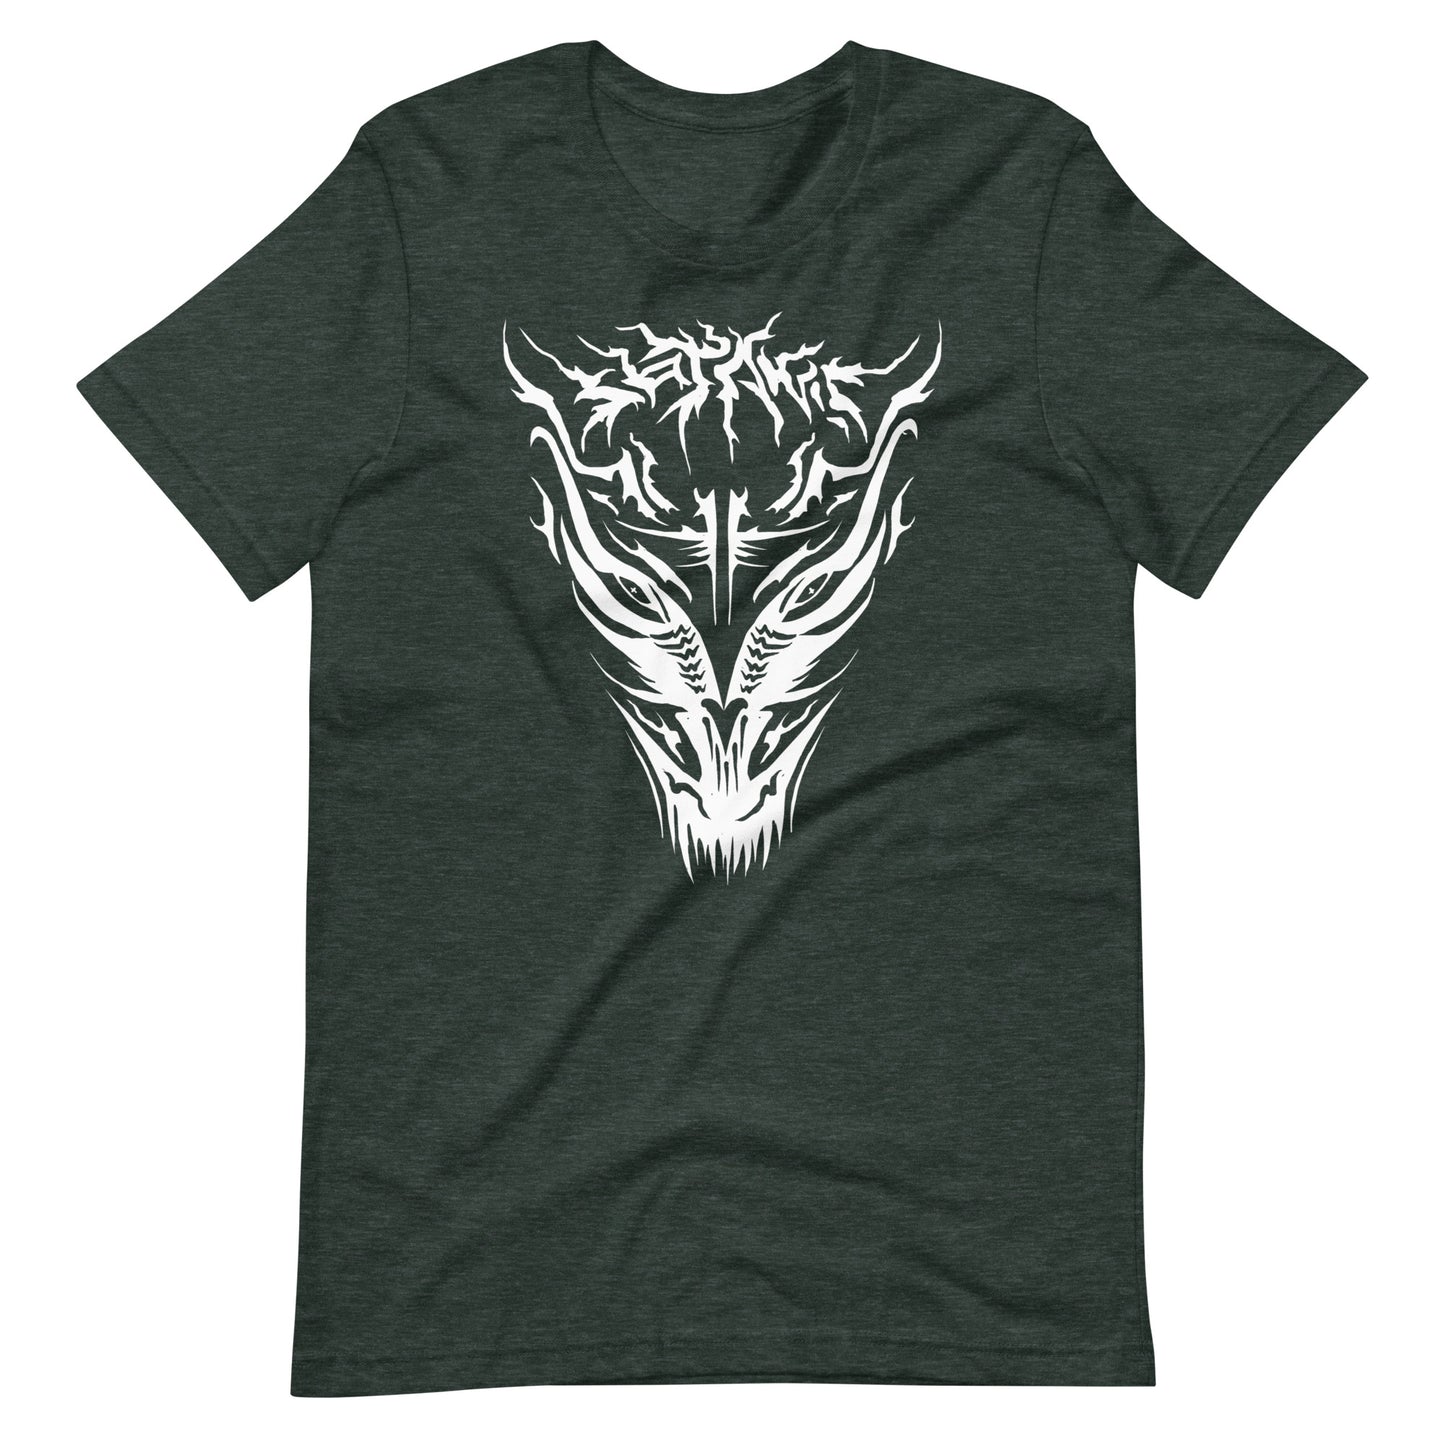 Demon - Men's t-shirt - Heather Forest Front